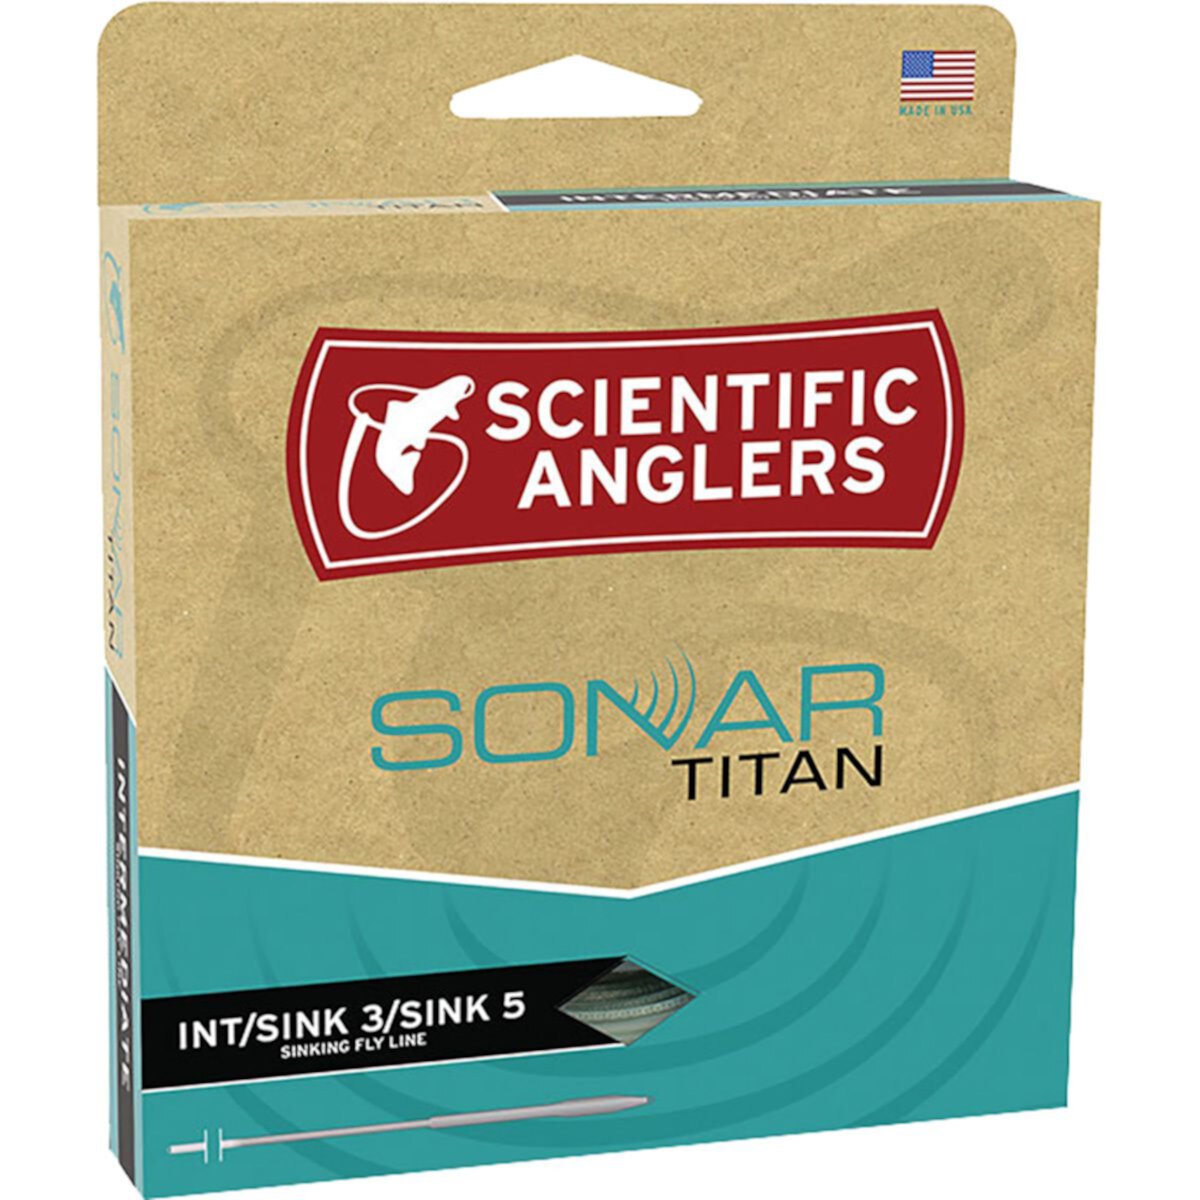 Научные рыболовы SONAR Titan Intermediate / Sink 3 / Sink 5 Scientific Anglers